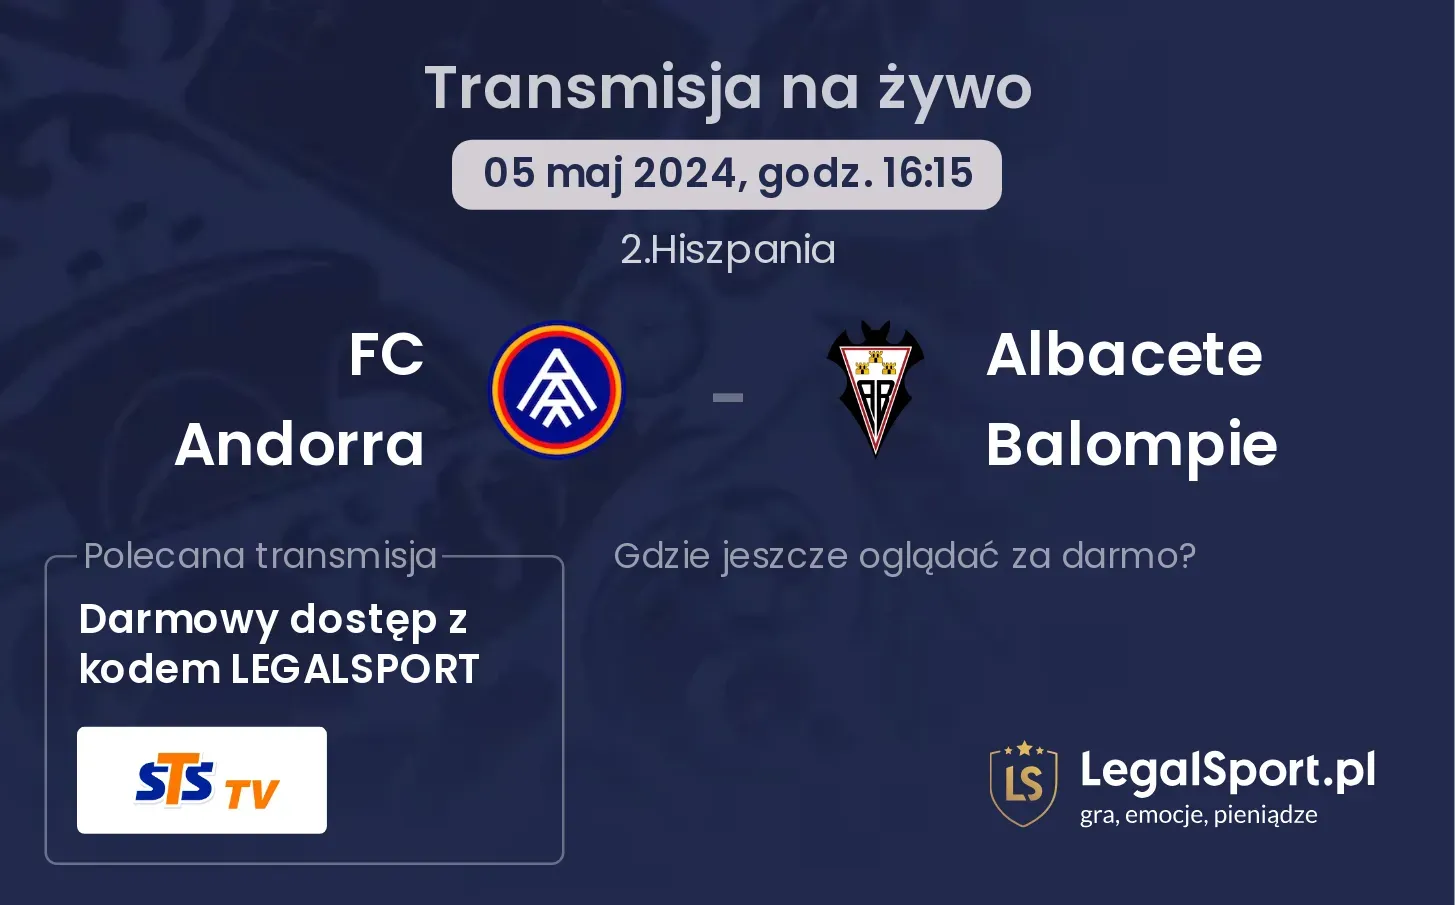 FC Andorra - Albacete Balompie transmisja na żywo